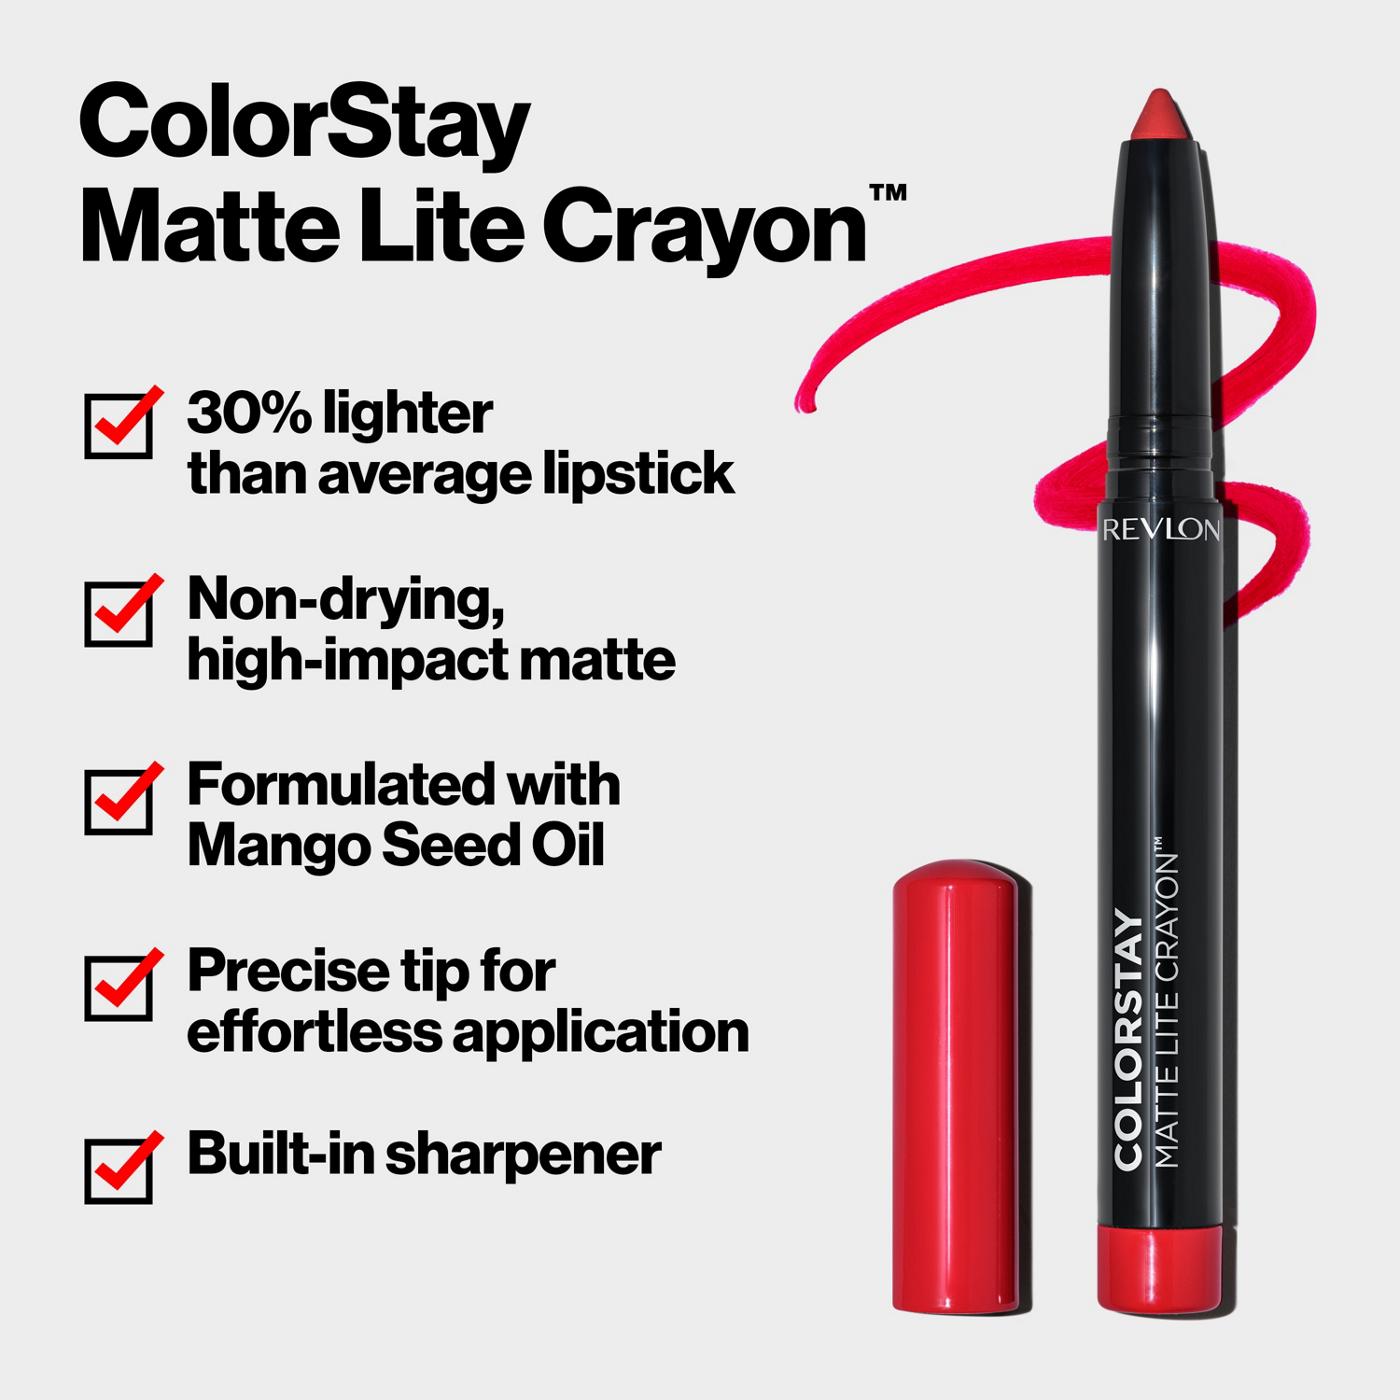 Revlon ColorStay Matte Lite Crayon Lipstick - Souffle All Day; image 2 of 7